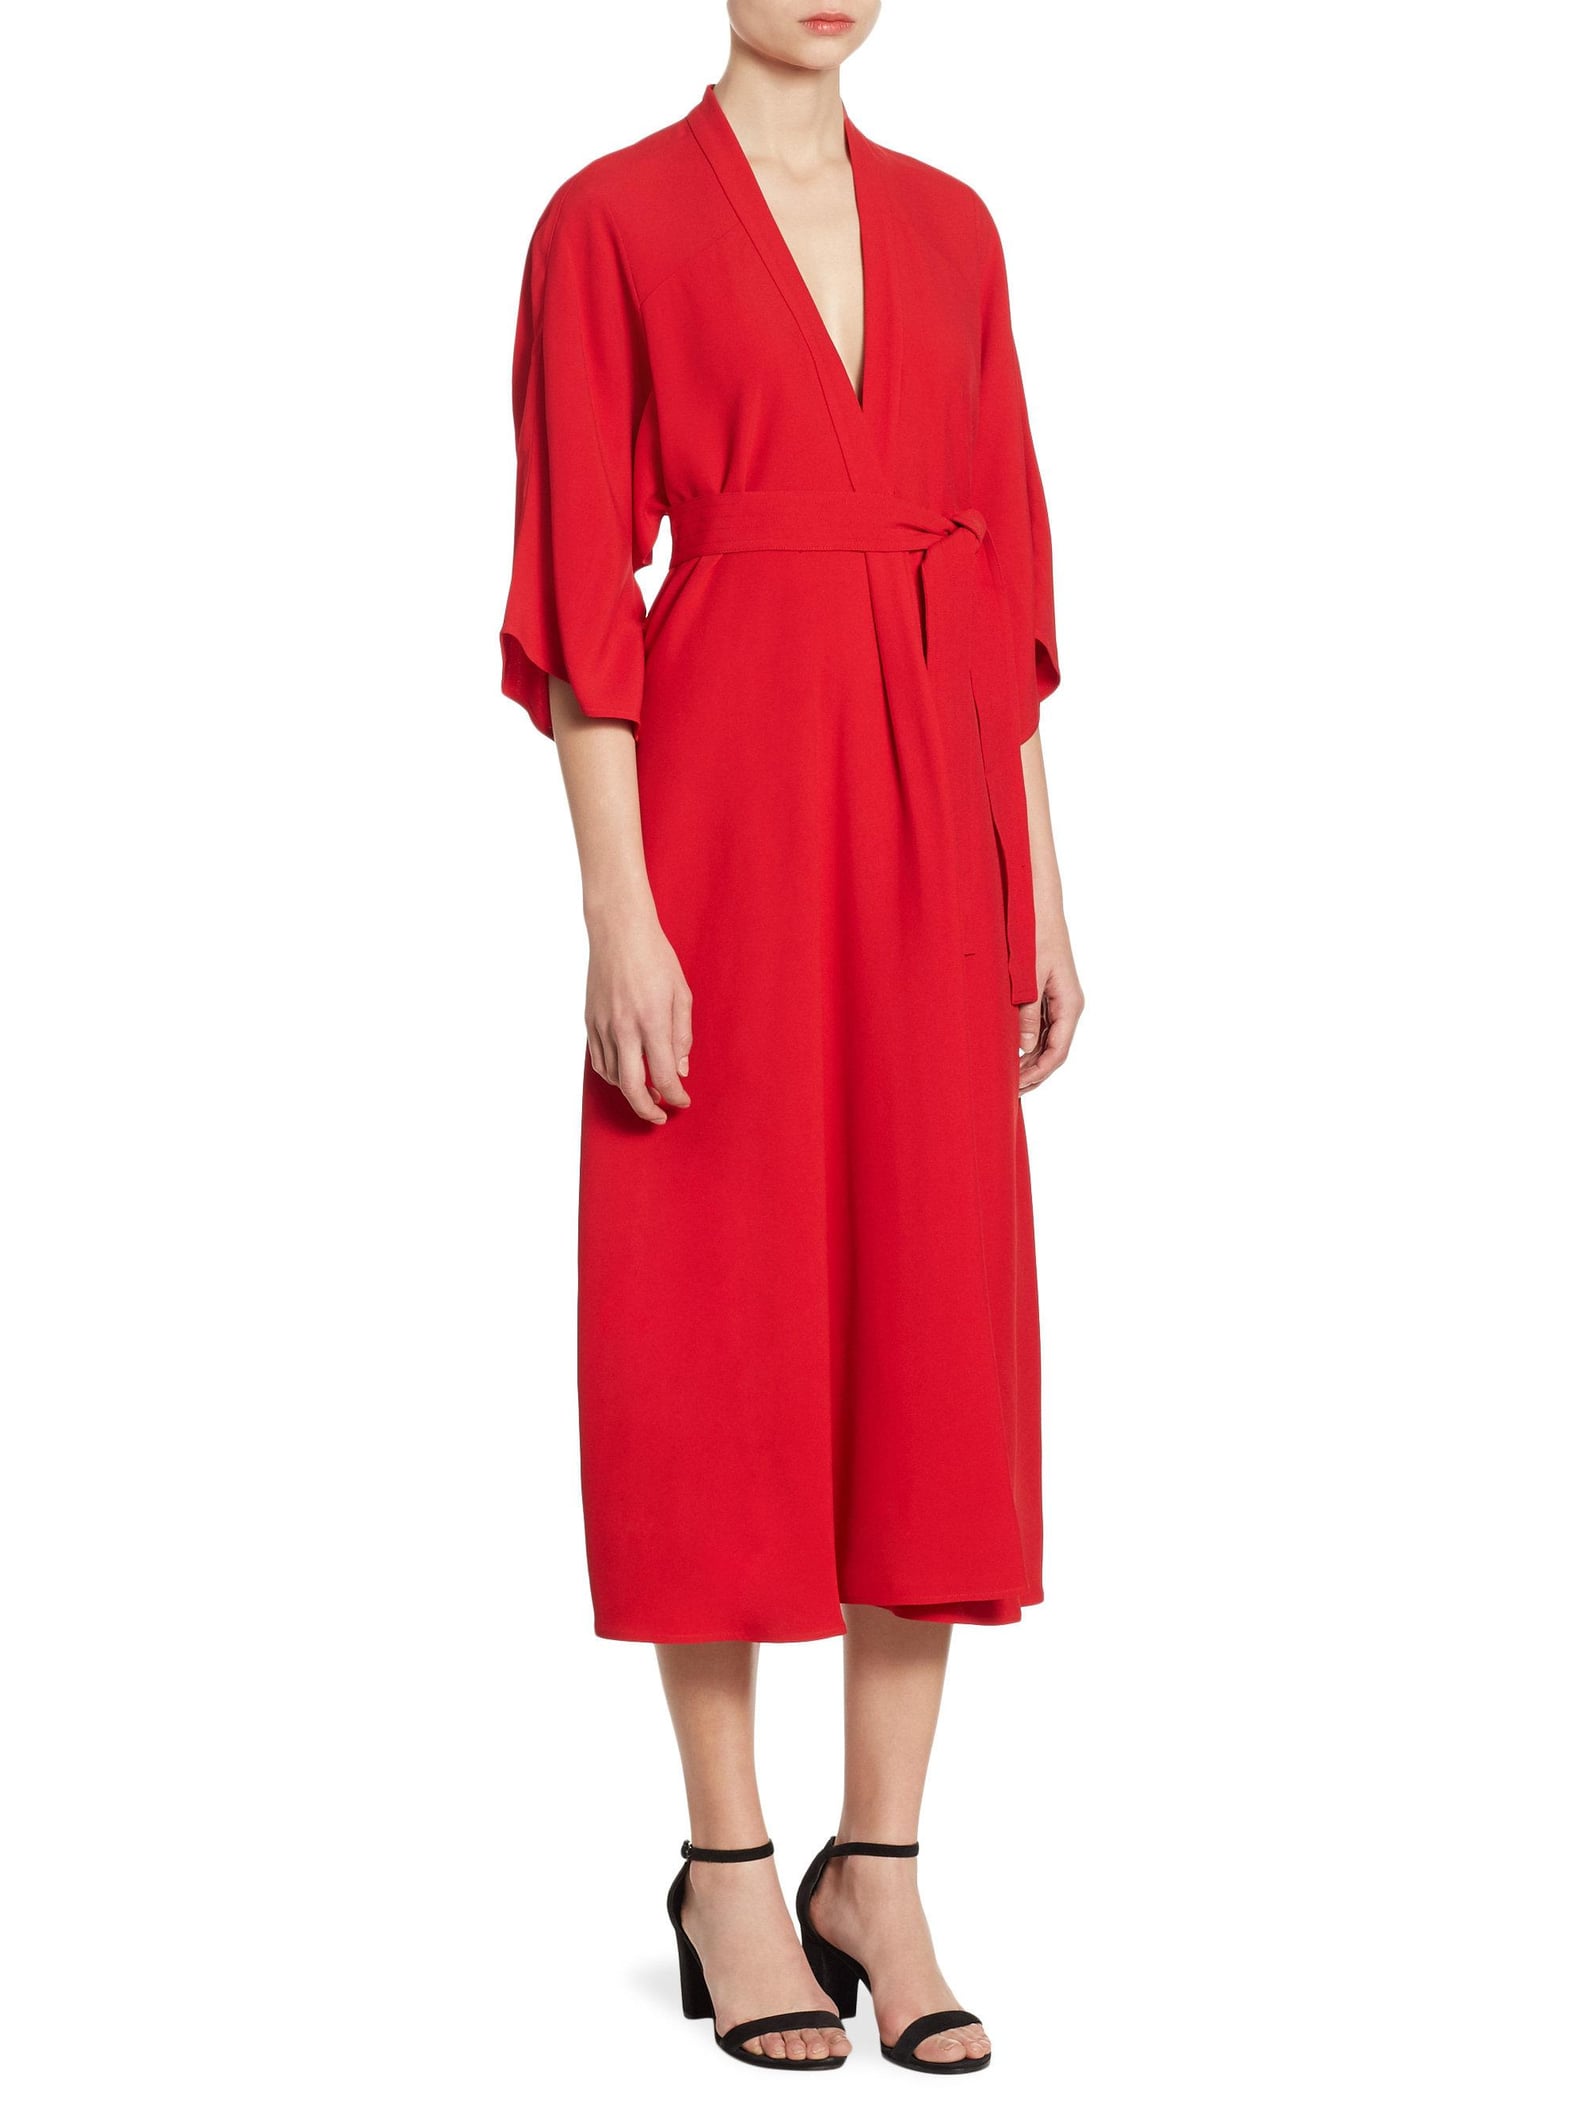 Victoria Beckham Red Dress Spring 2018 Collection | POPSUGAR Fashion